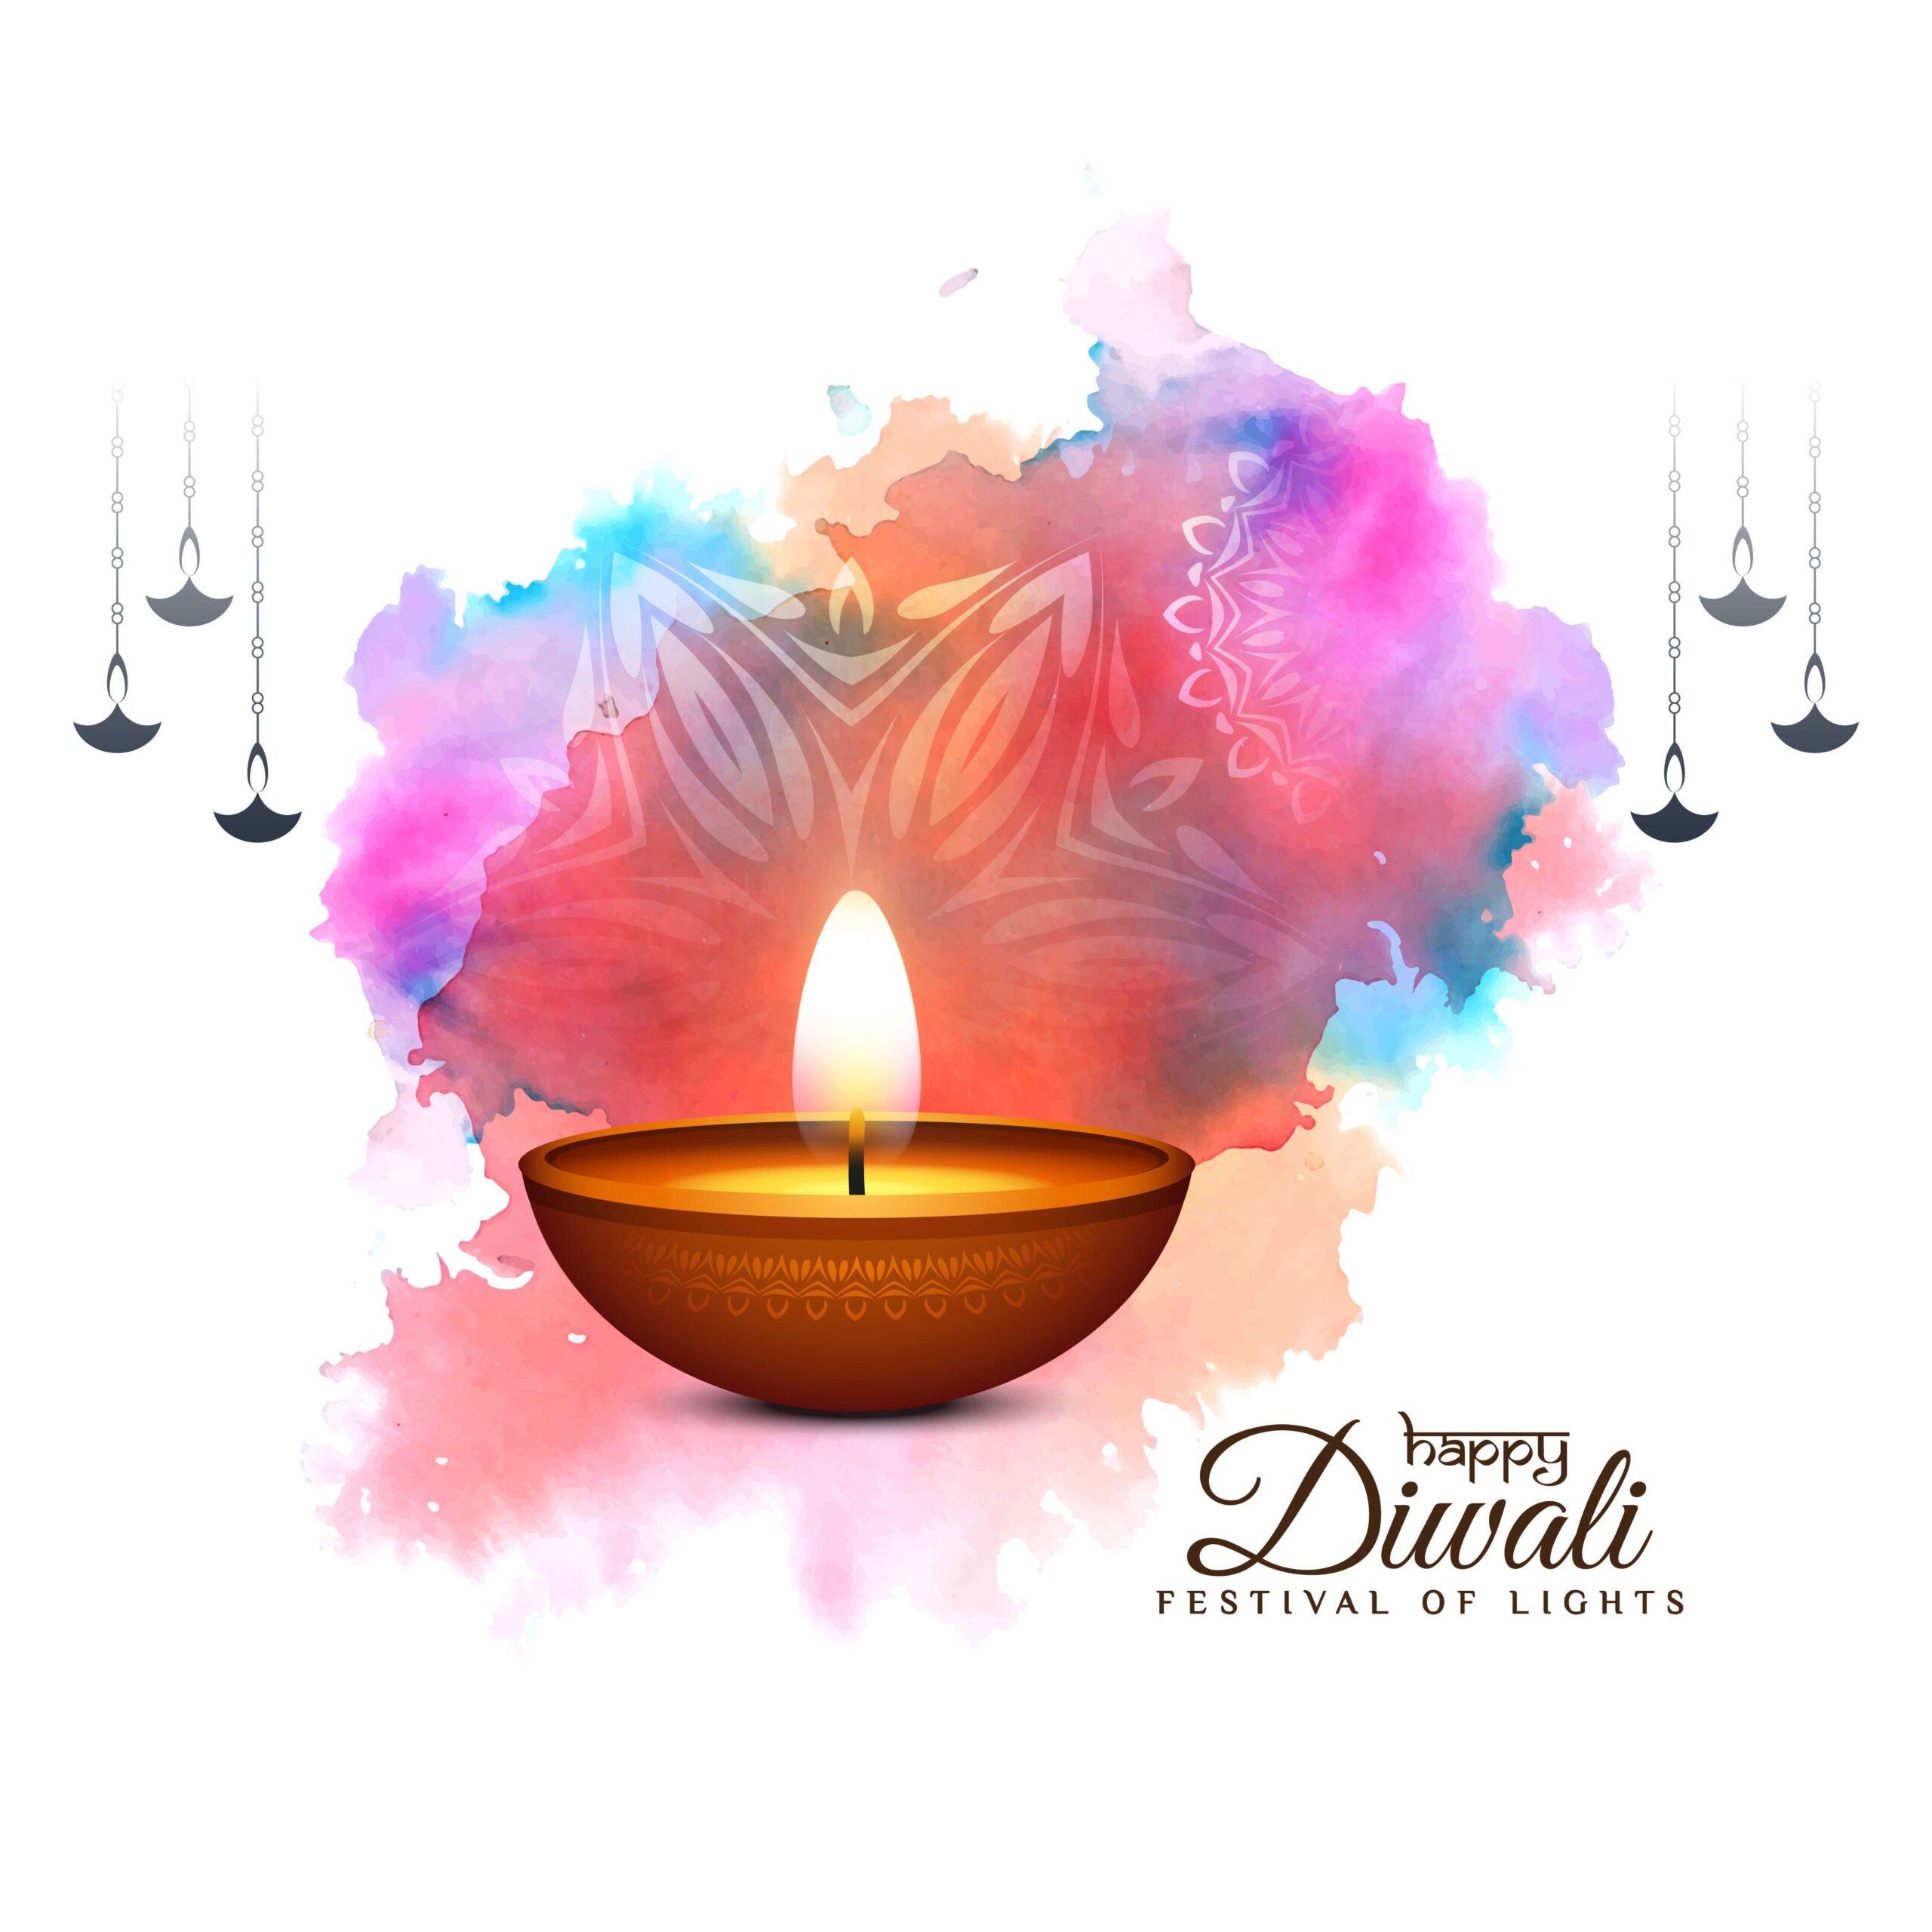 Happy Diwali 2021 Image & Photo Free Download